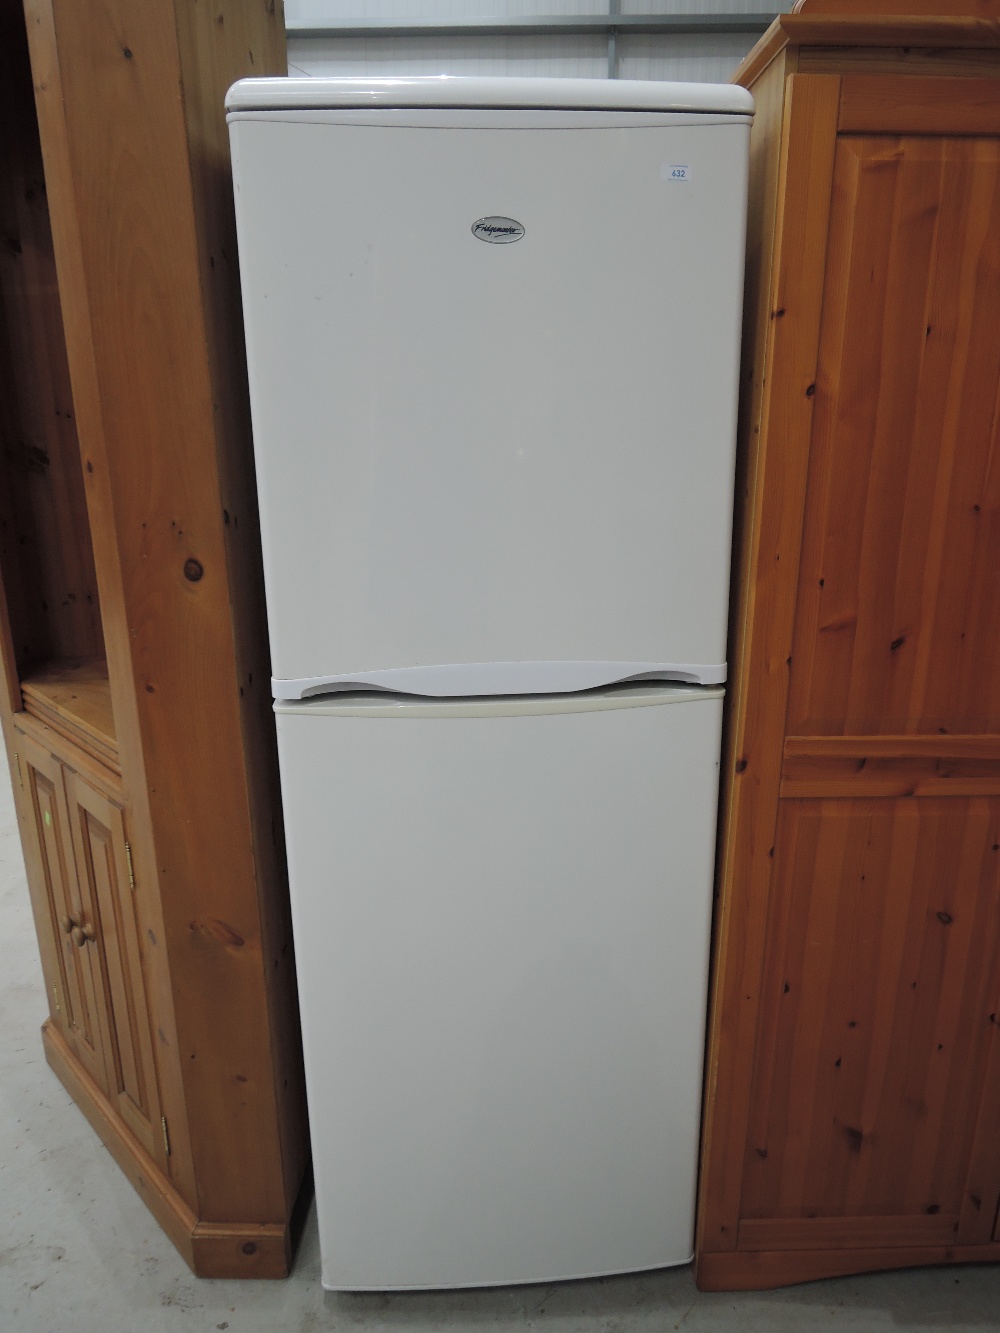 A Fridgemaster fridge freezer